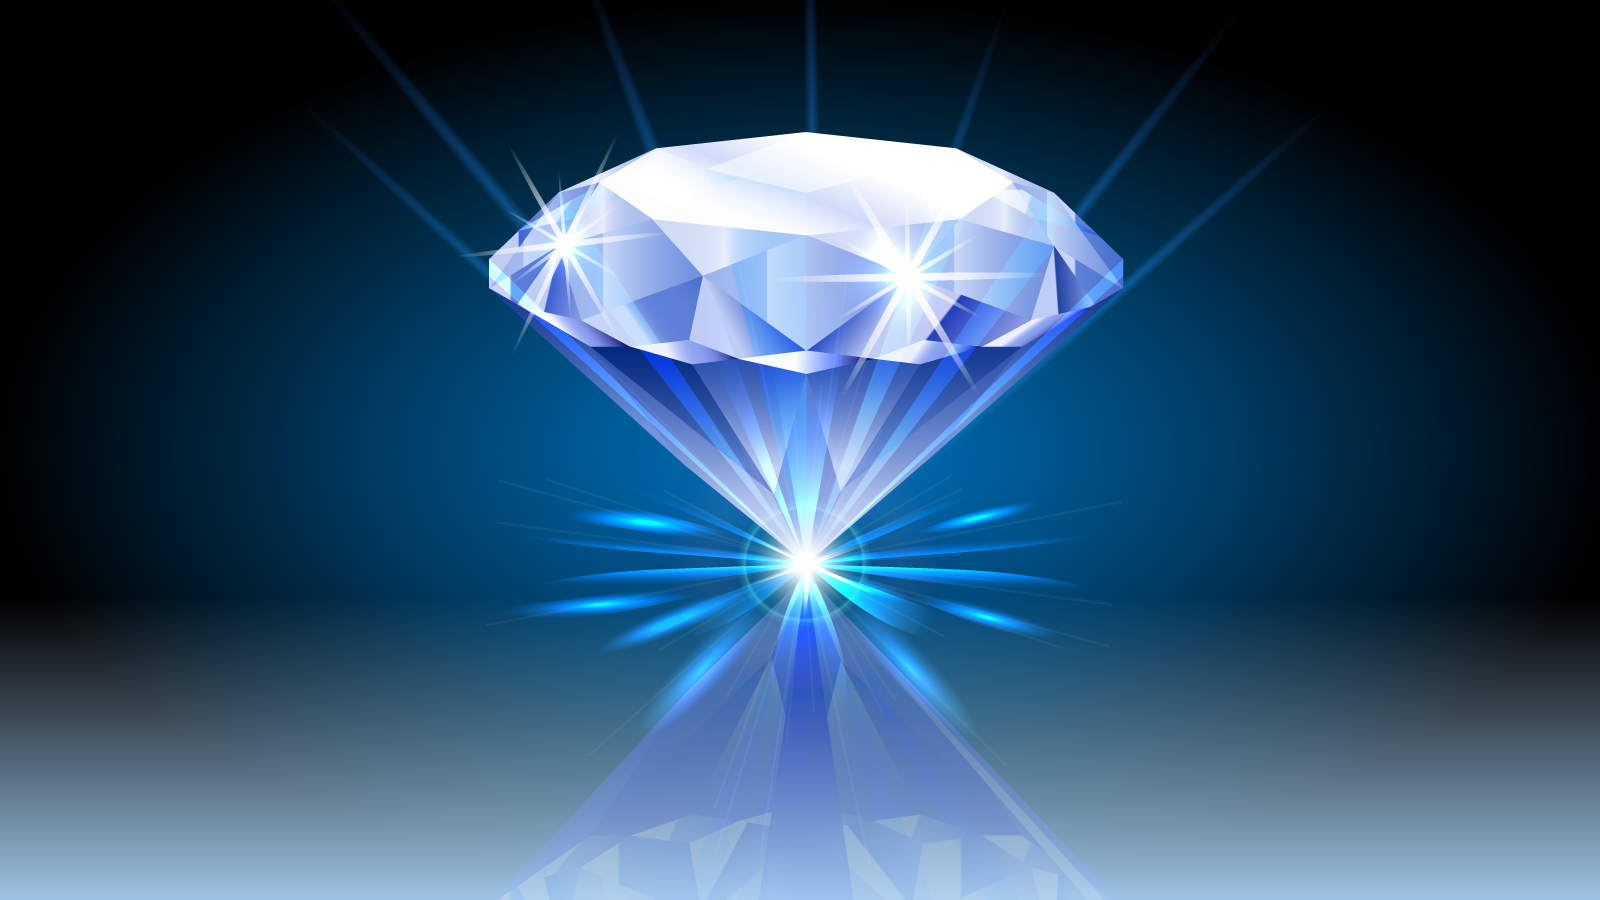 RapNet Inventory of Diamonds